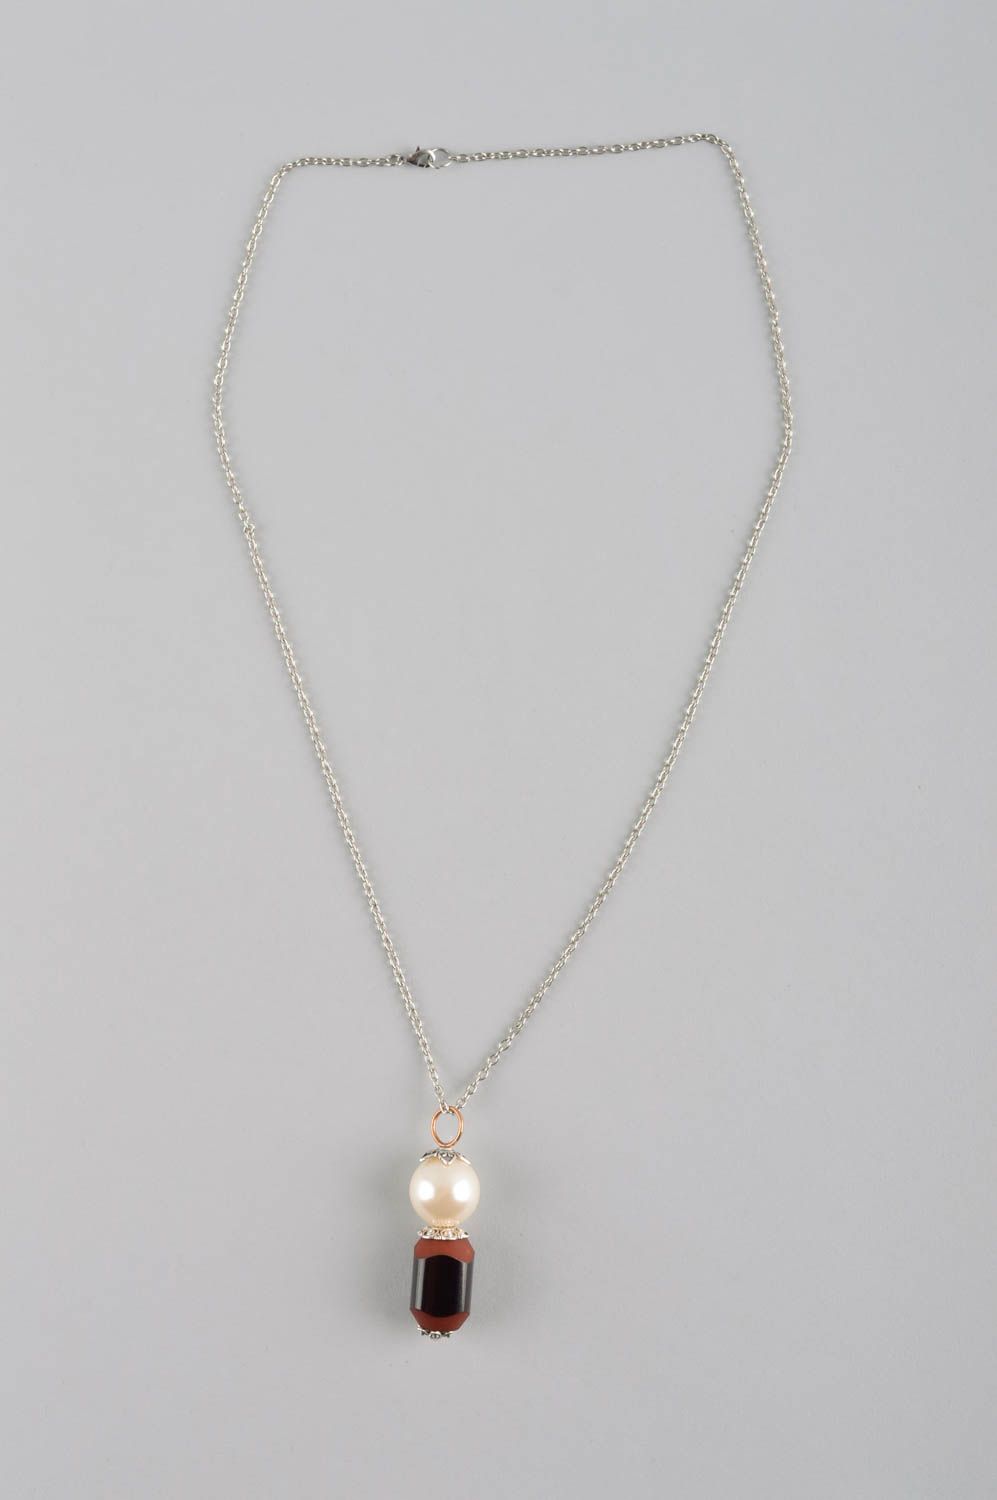 Chain pendant handmade wooden pendant fashion jewelry stylish pendant for women photo 2